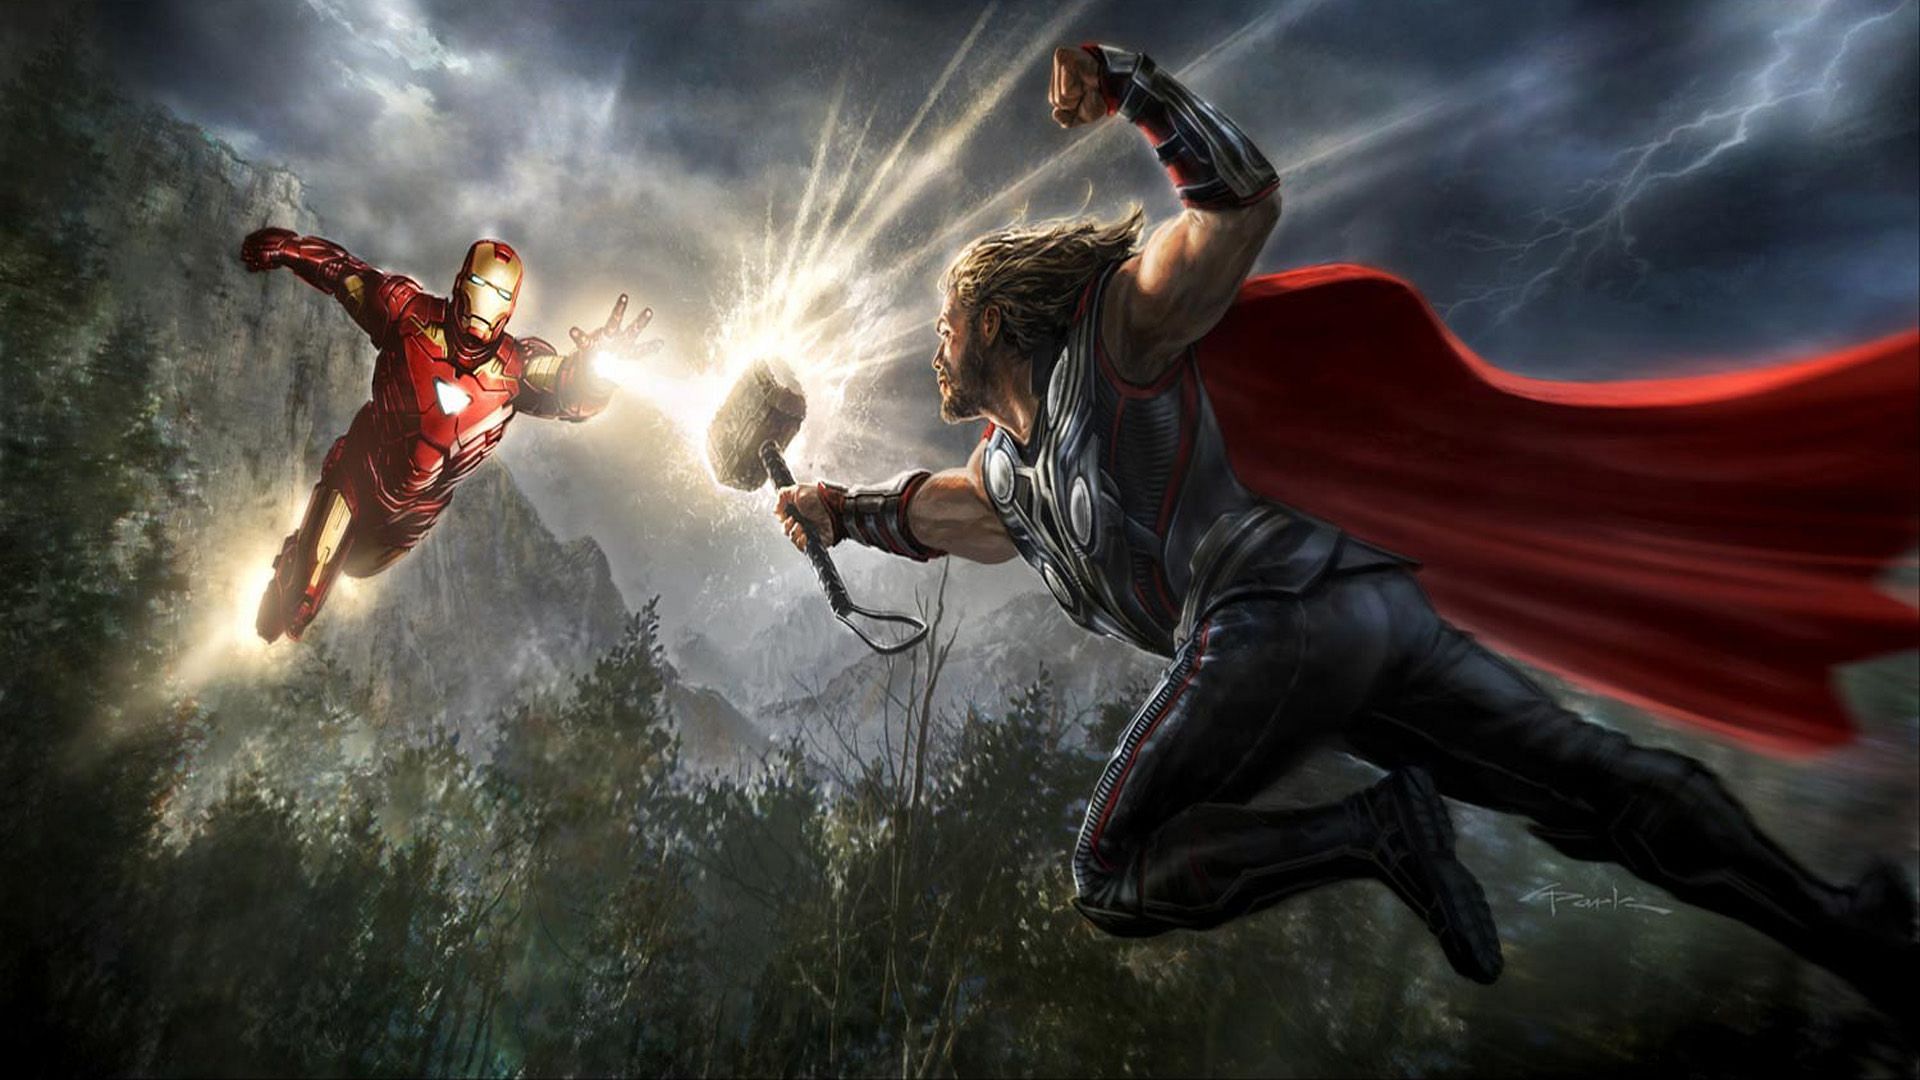 Thor vs Iron Man (Image via Marvel)